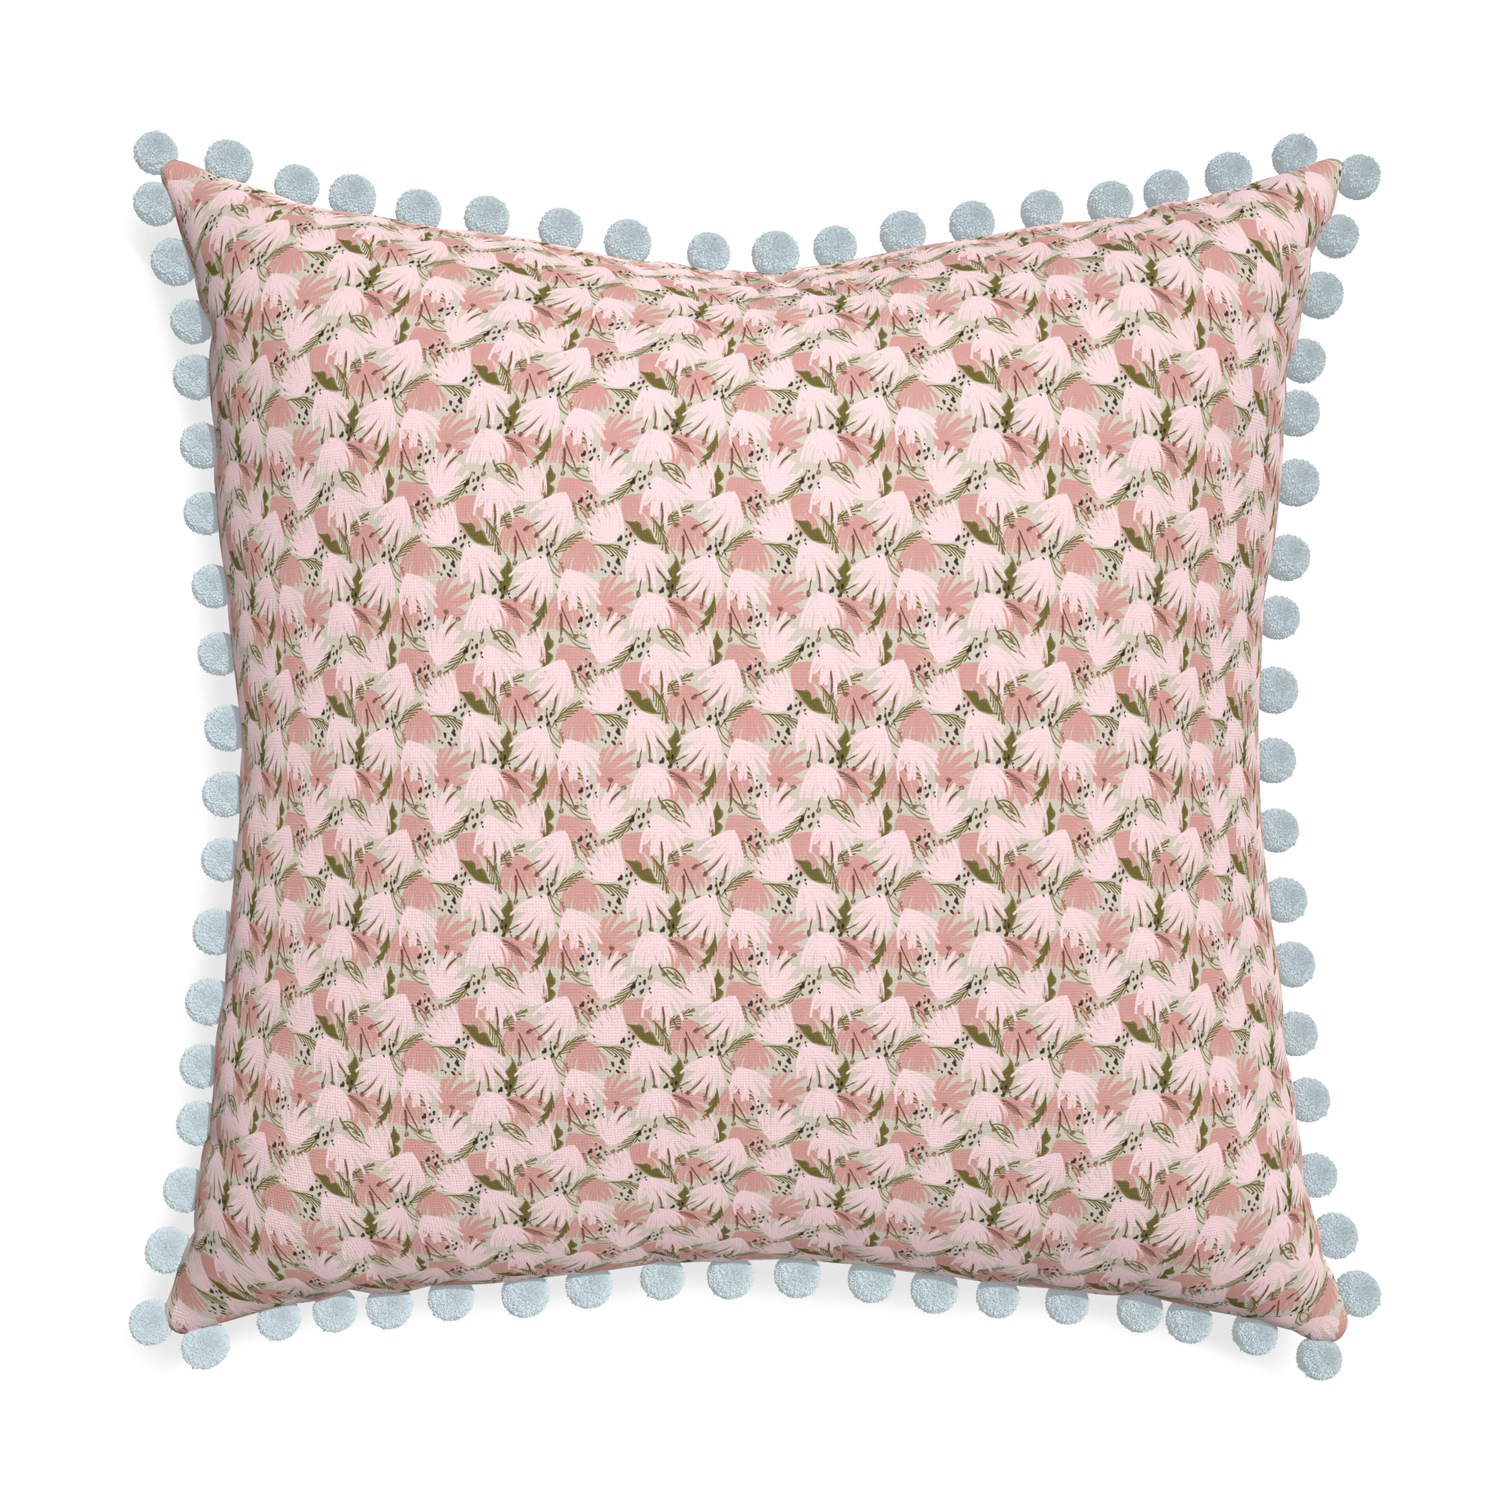 Euro-sham eden pink custom pillow with powder pom pom on white background